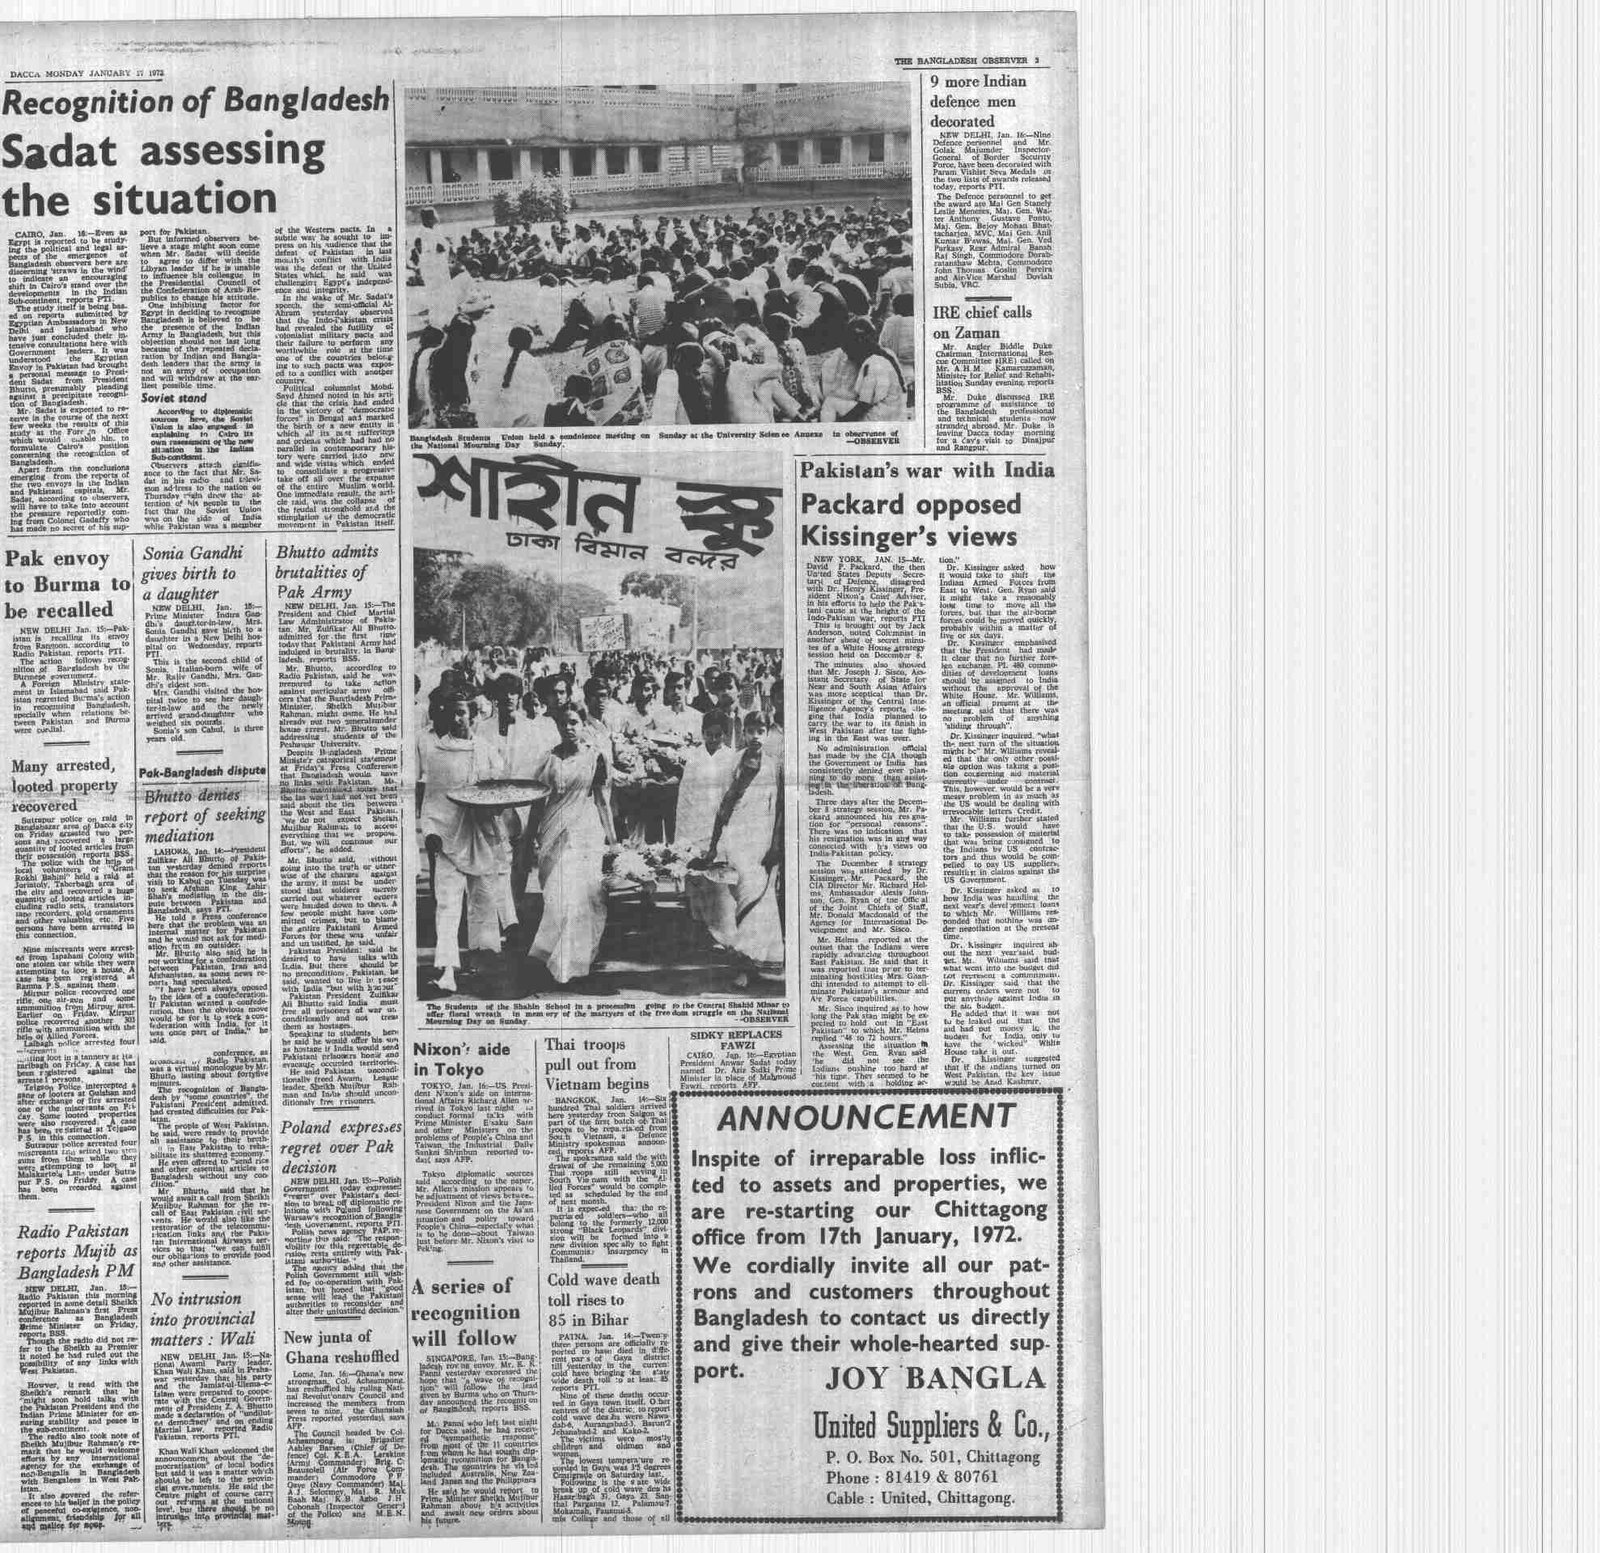 17JAN1972-Bangladesh Observer-Regular-Page 3